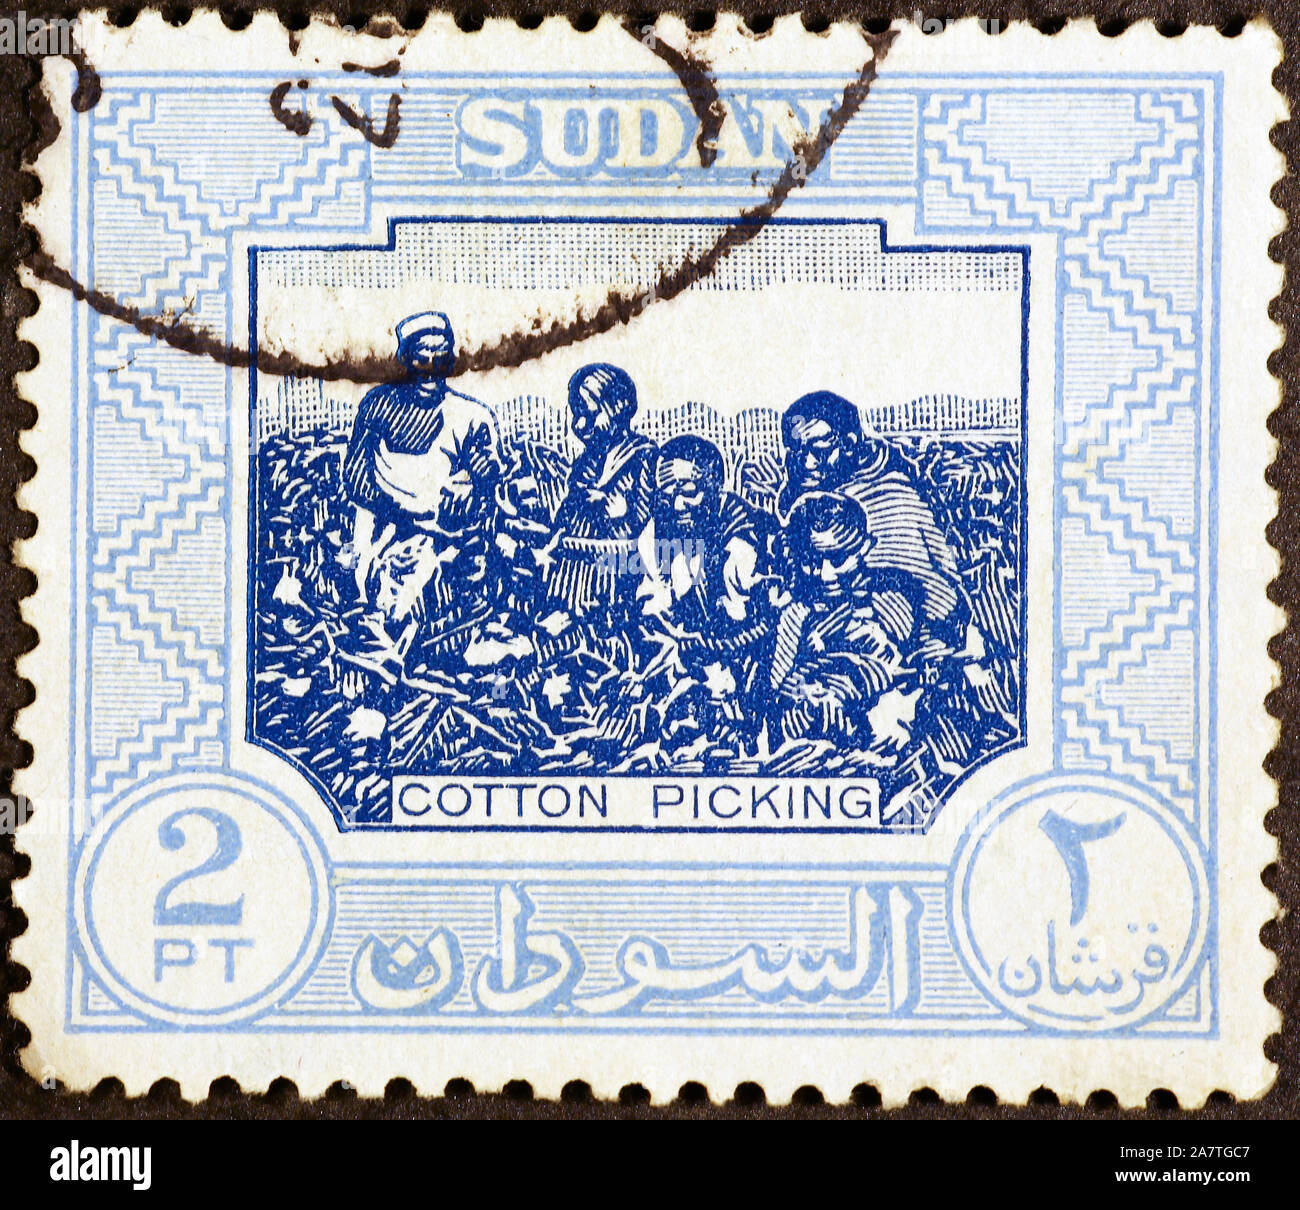 Cotton picking on vintage postage stamp of Sudan Stock Photo